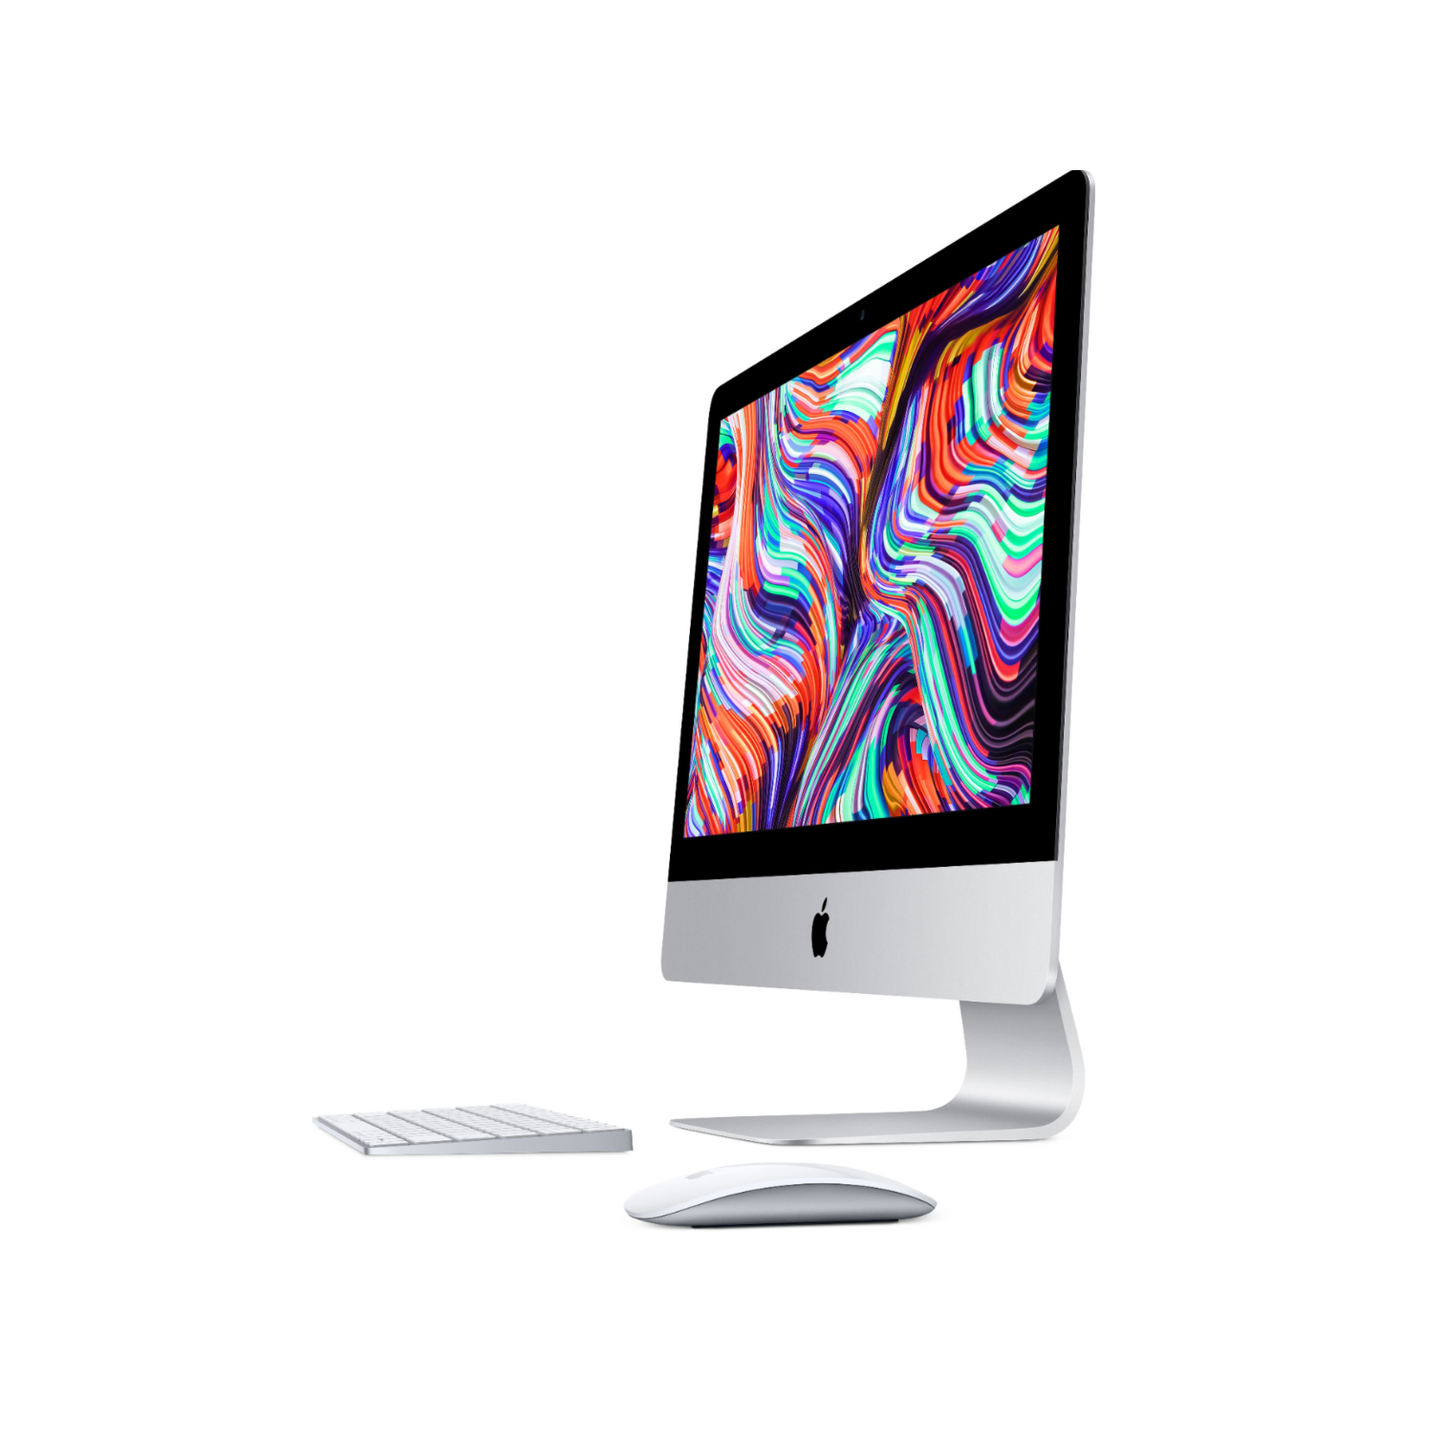 Certified Used 21.5" 2017 Apple iMac with Intel Core i5, 8GB RAM, 1TB Storage